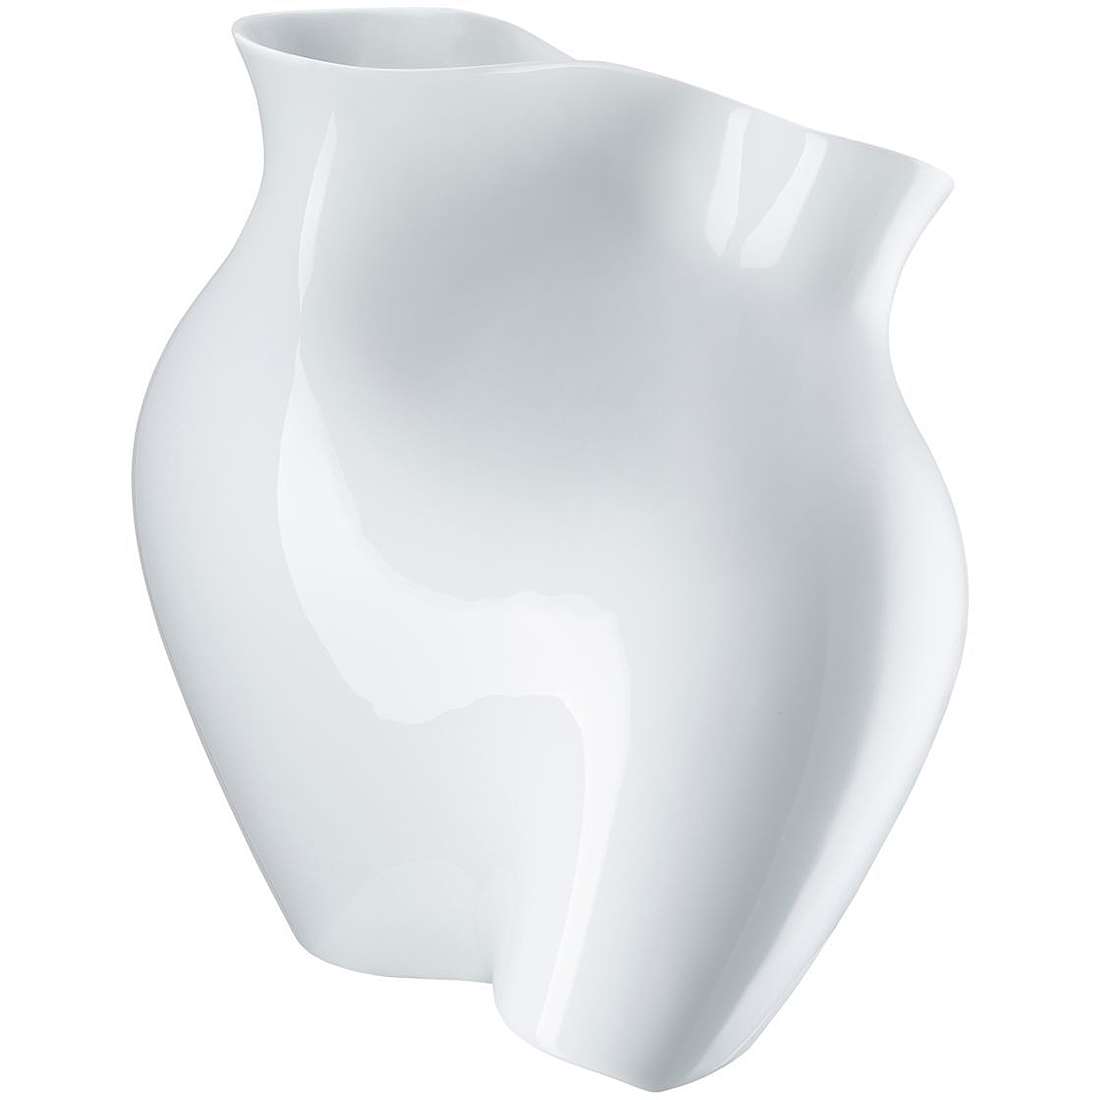 vaso da interno Rosenthal Design 14484-800001-26026